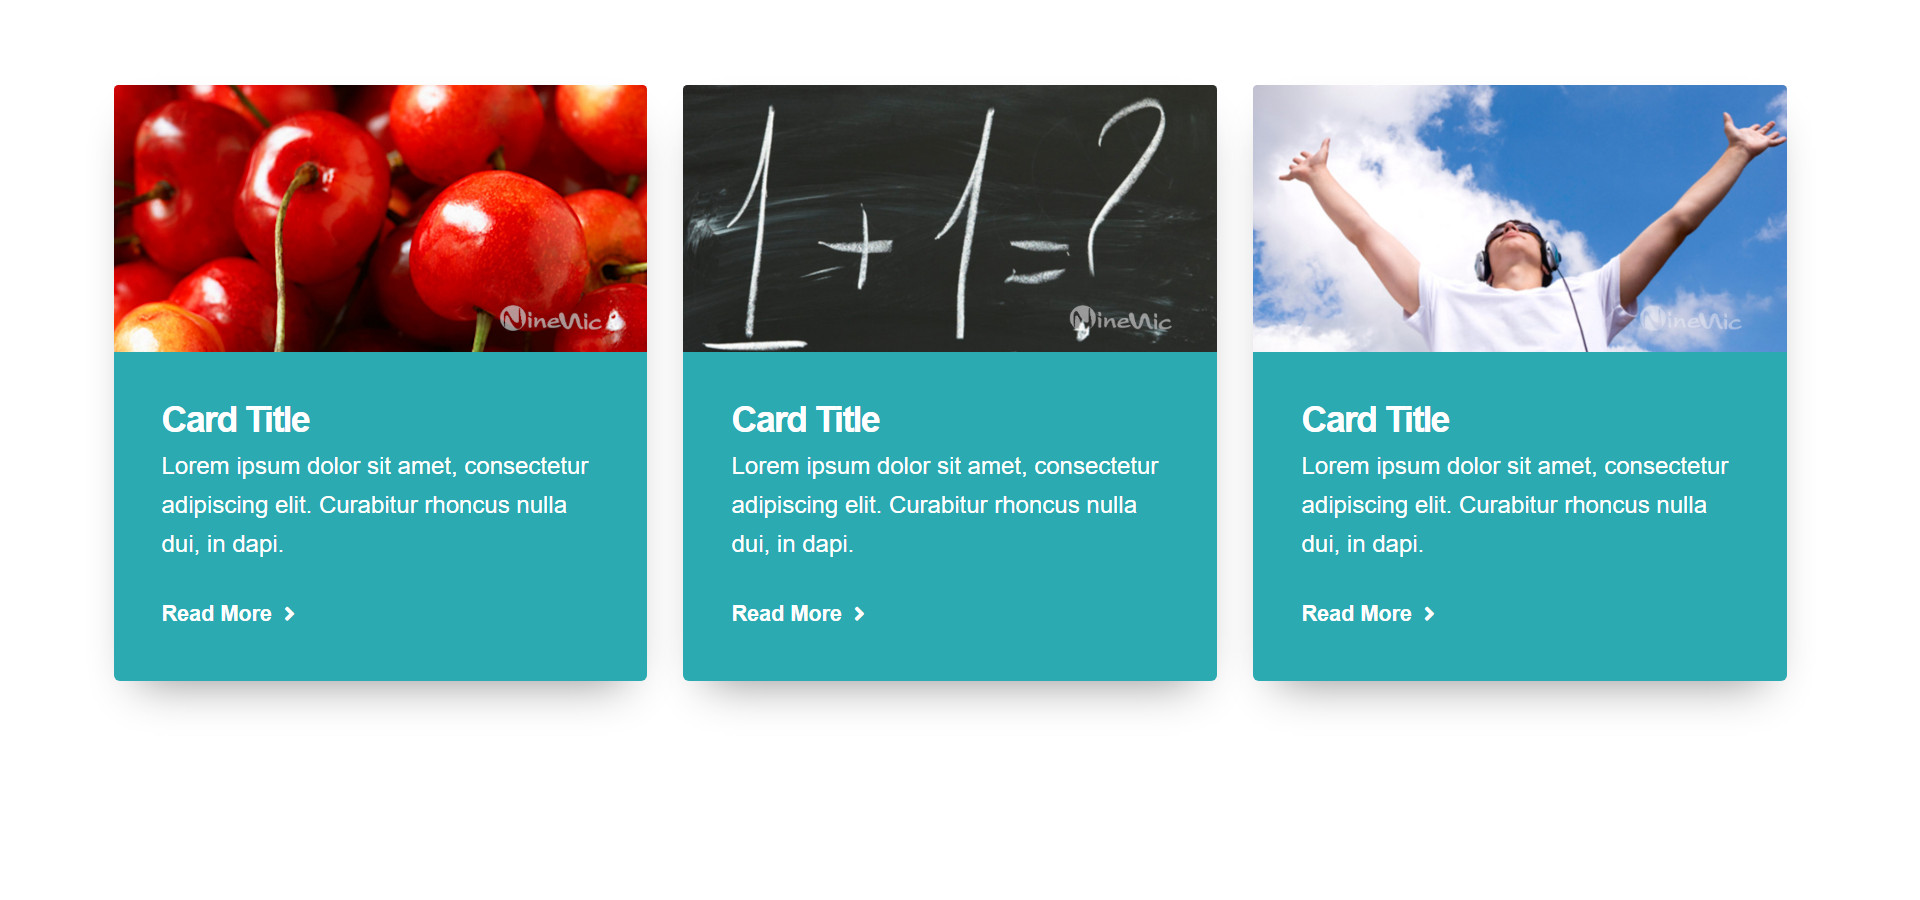 Shortcodes cards - shadow-3-images-top-bg-color-tertiary-3-column แนะนำ เว็บไซต์สำเร็จรูป NineNIC